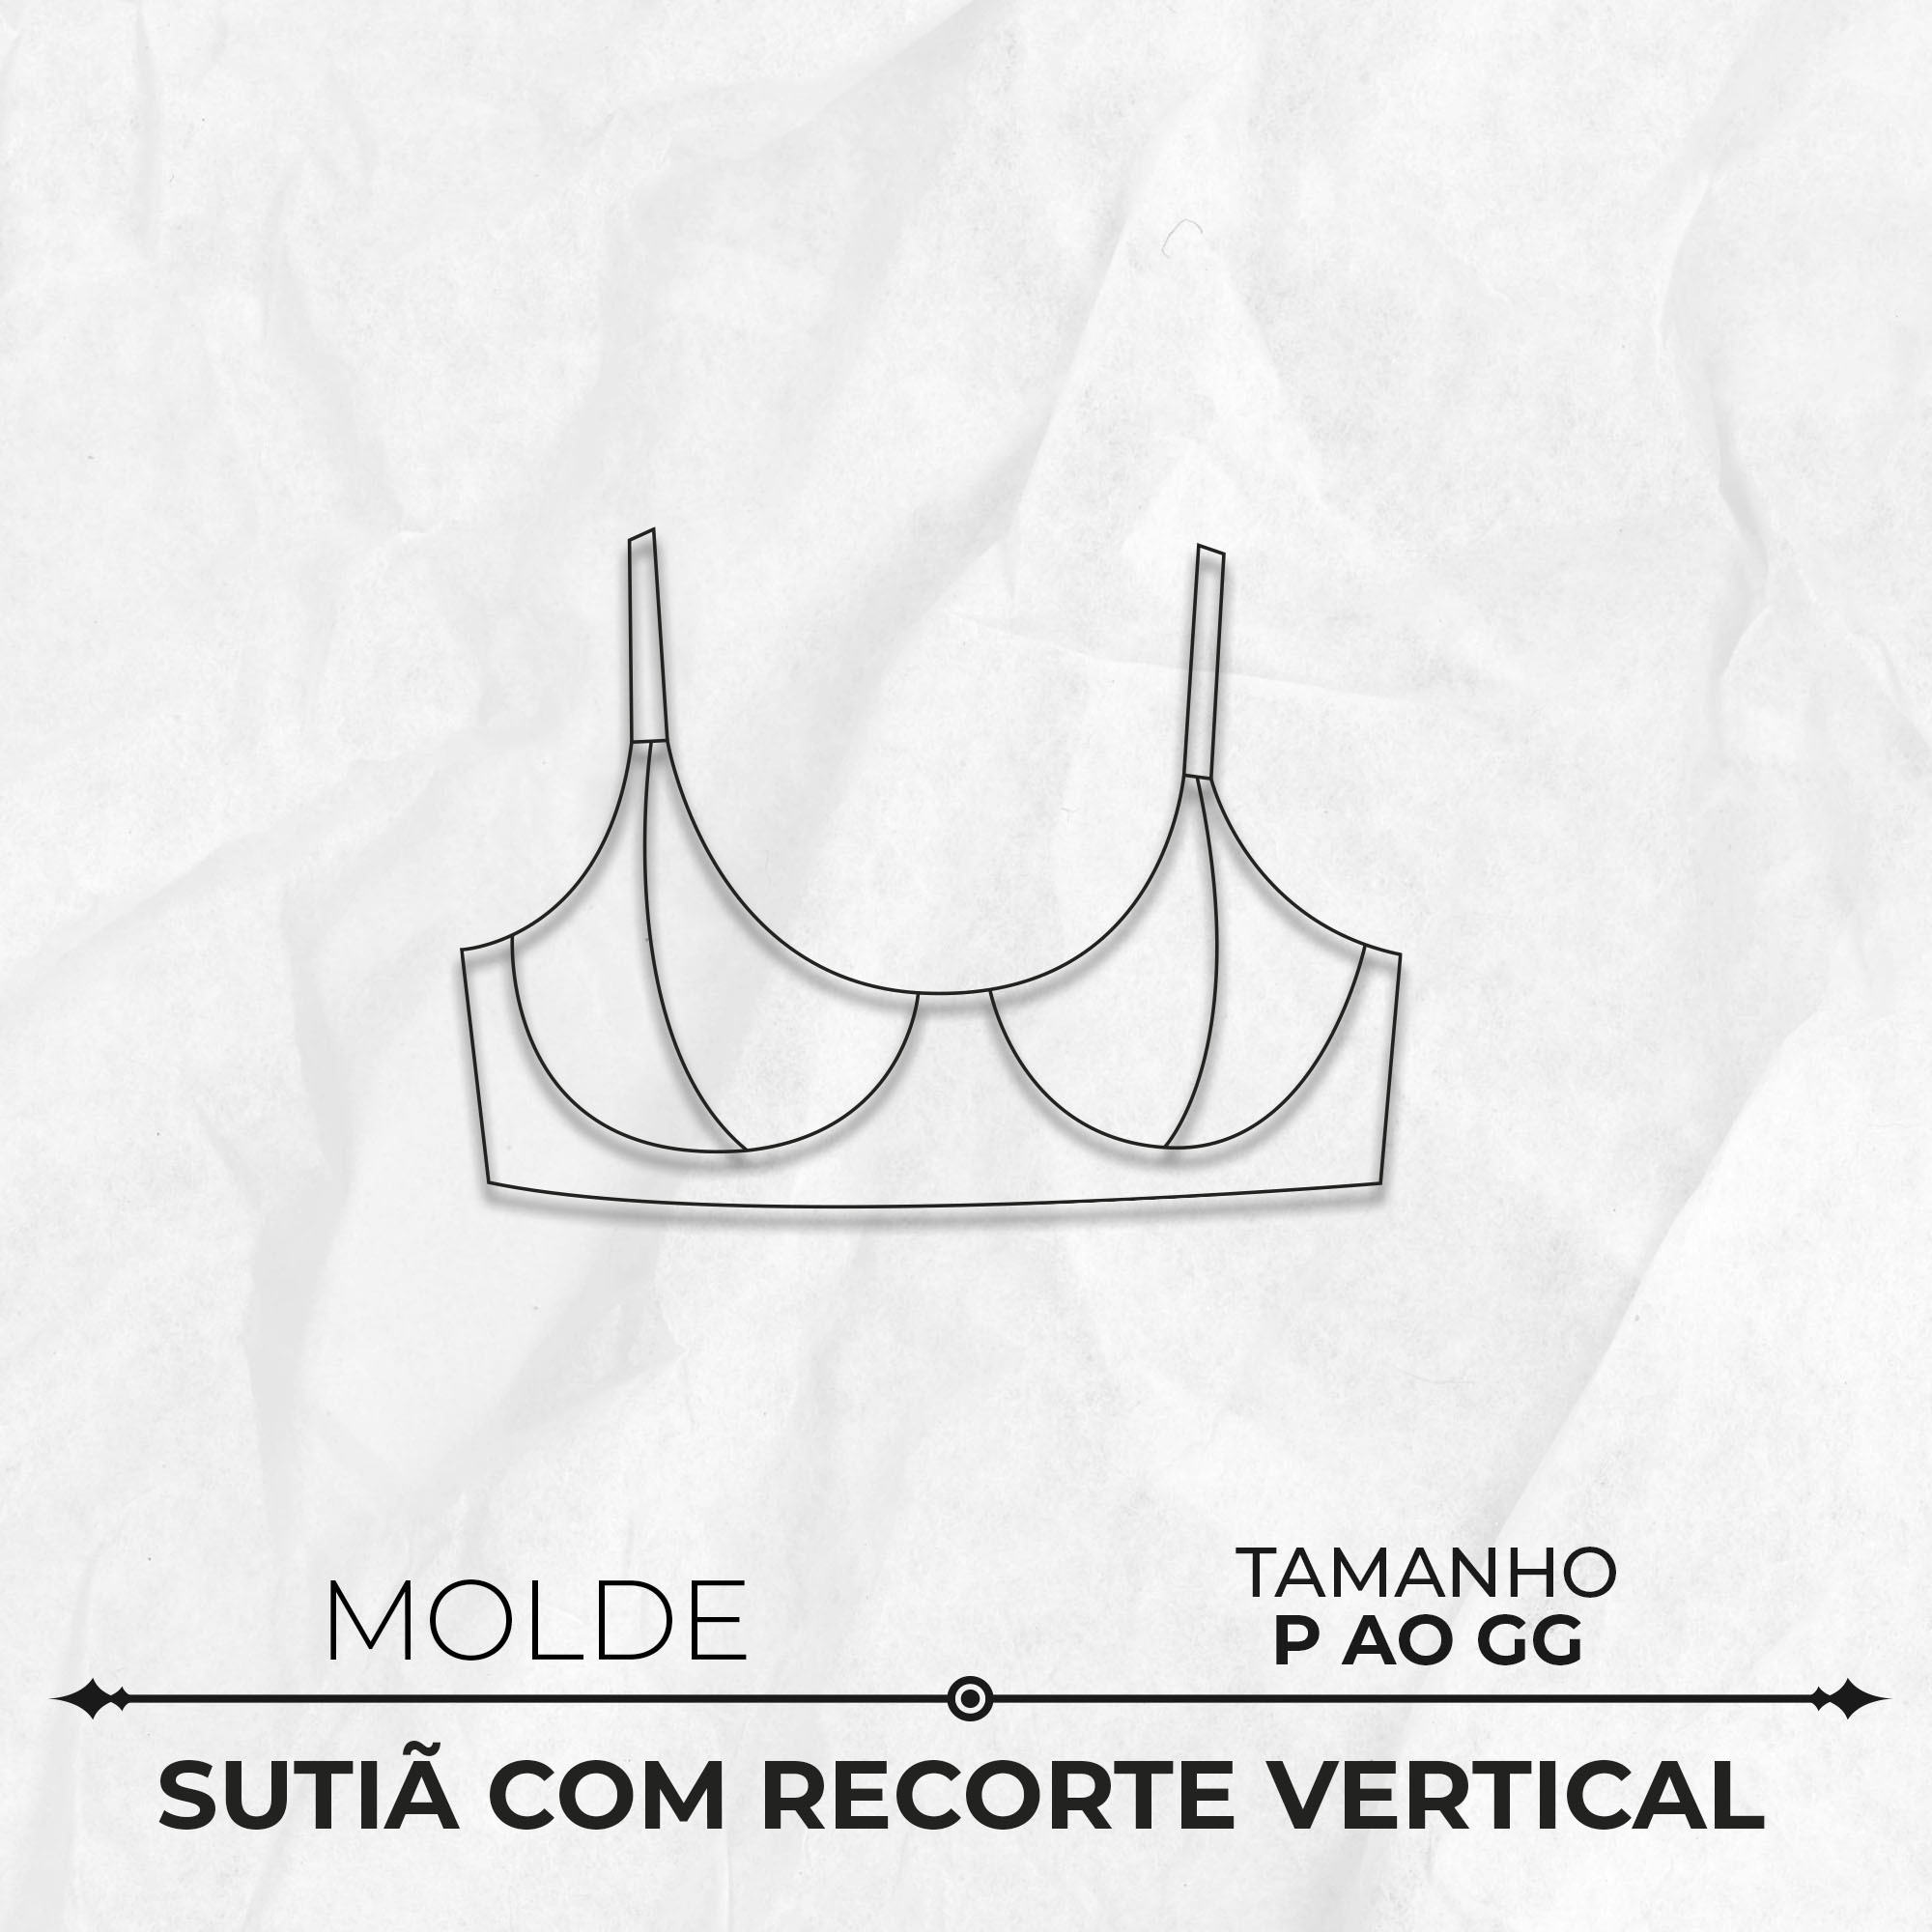 0Molde-lingerie-sutia-com-recorte-vertical-16795-CAPA